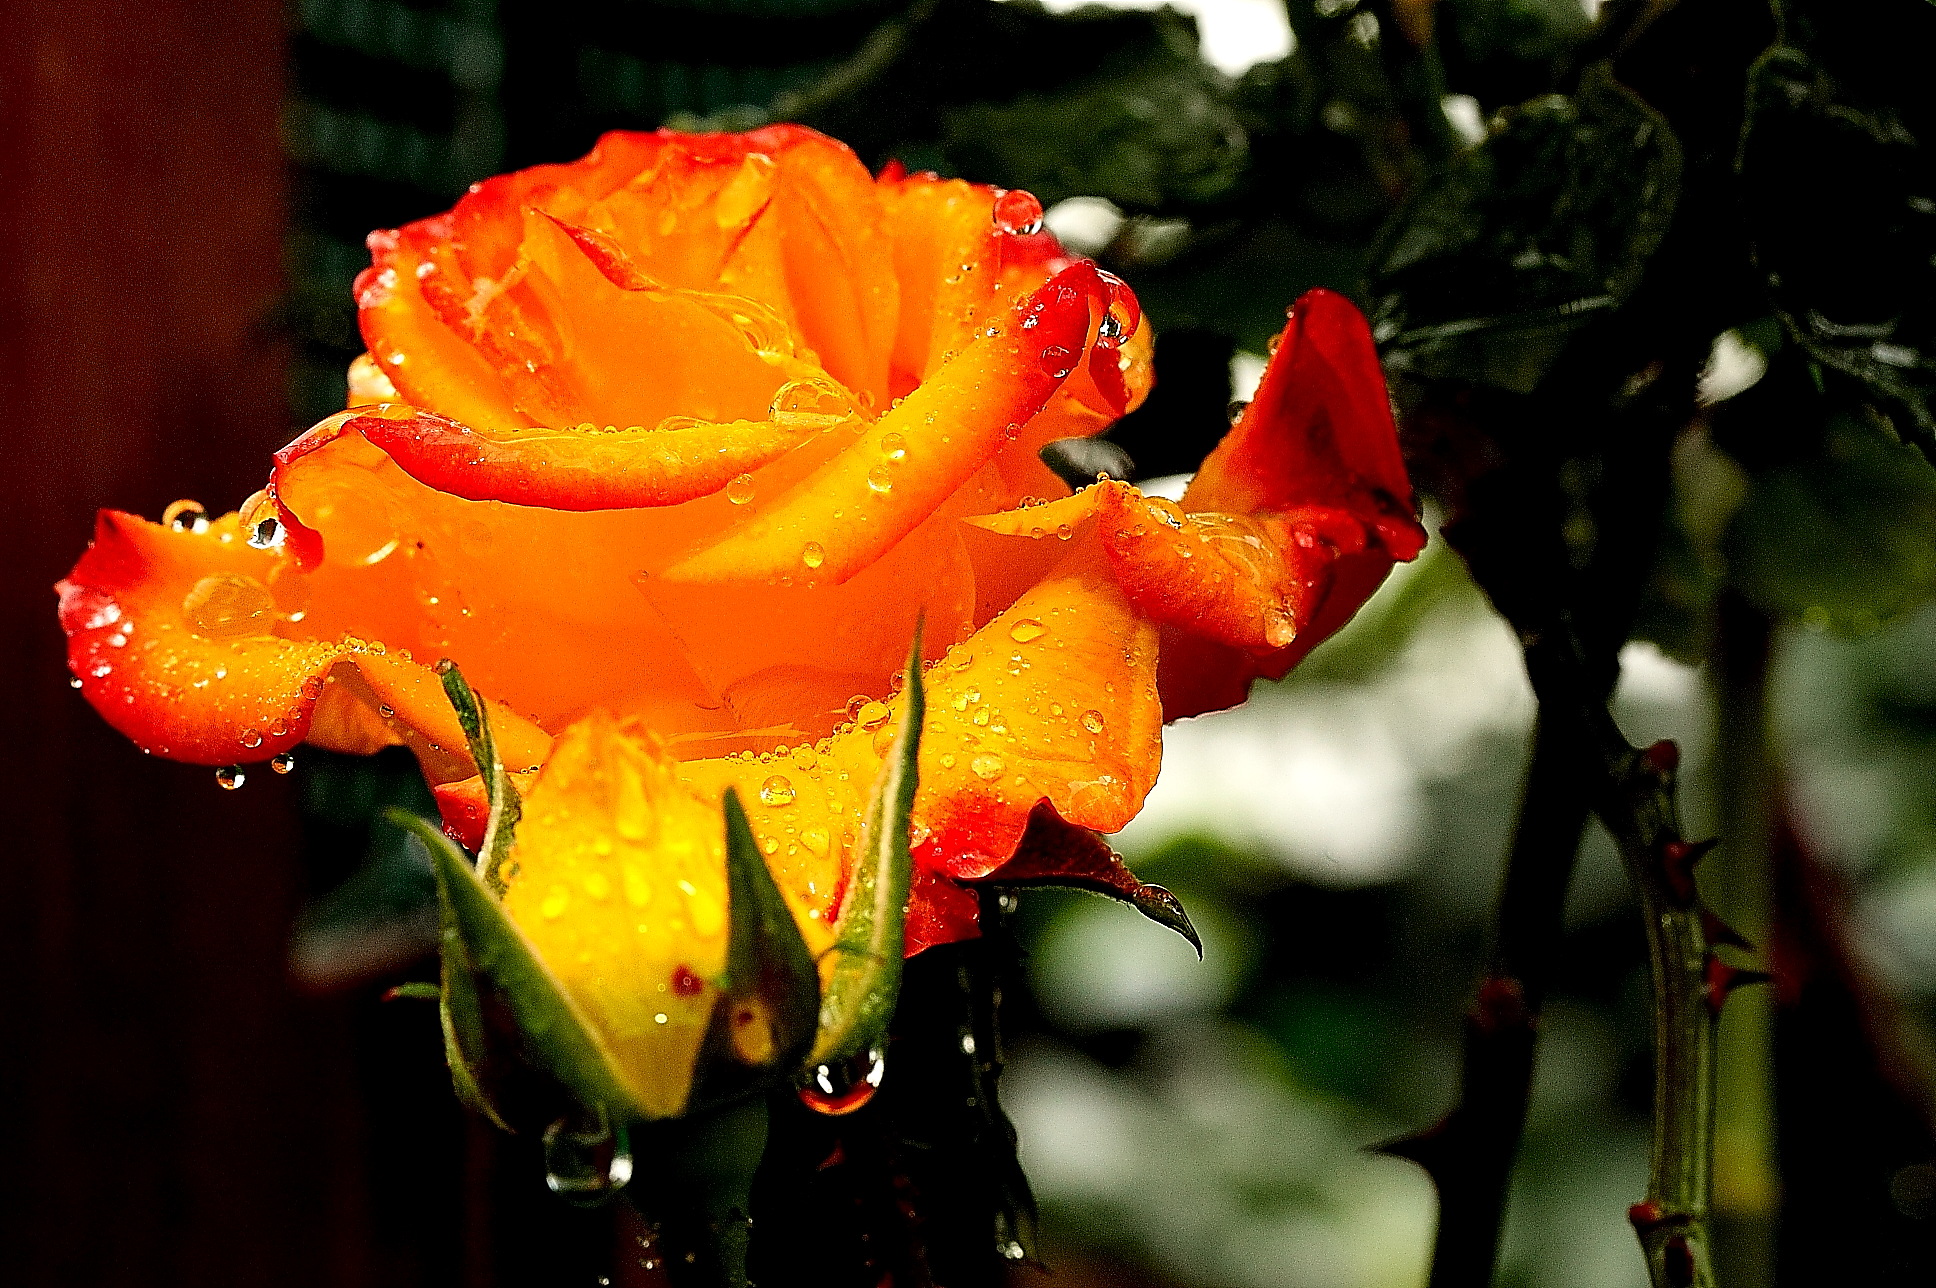 It's raining on my rose-...